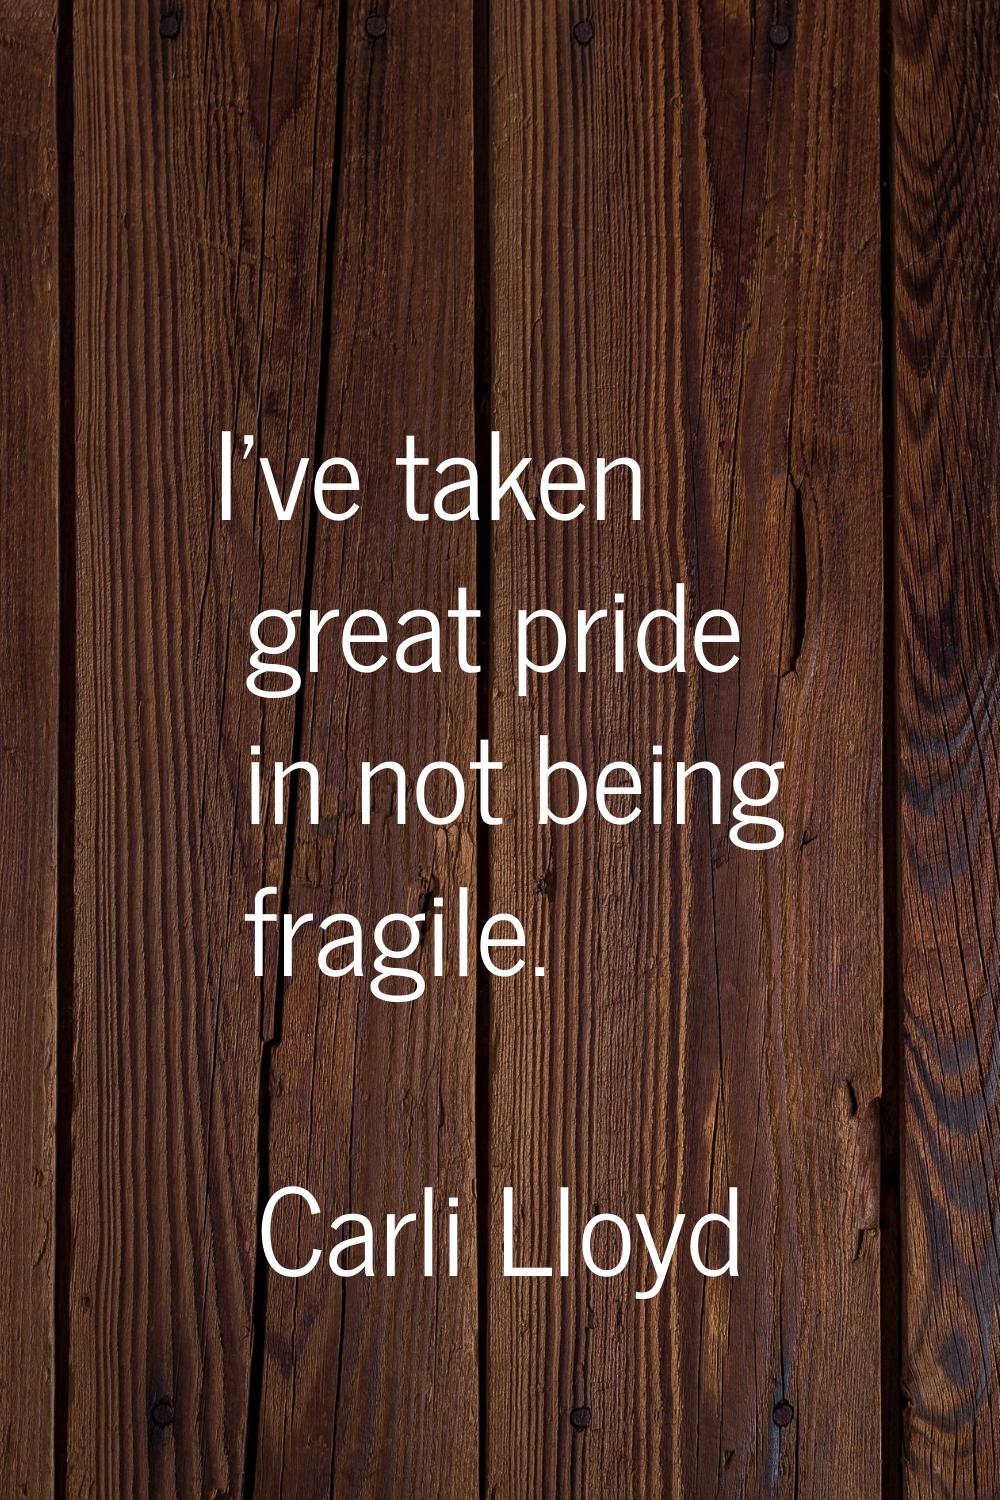 I've taken great pride in not being fragile.